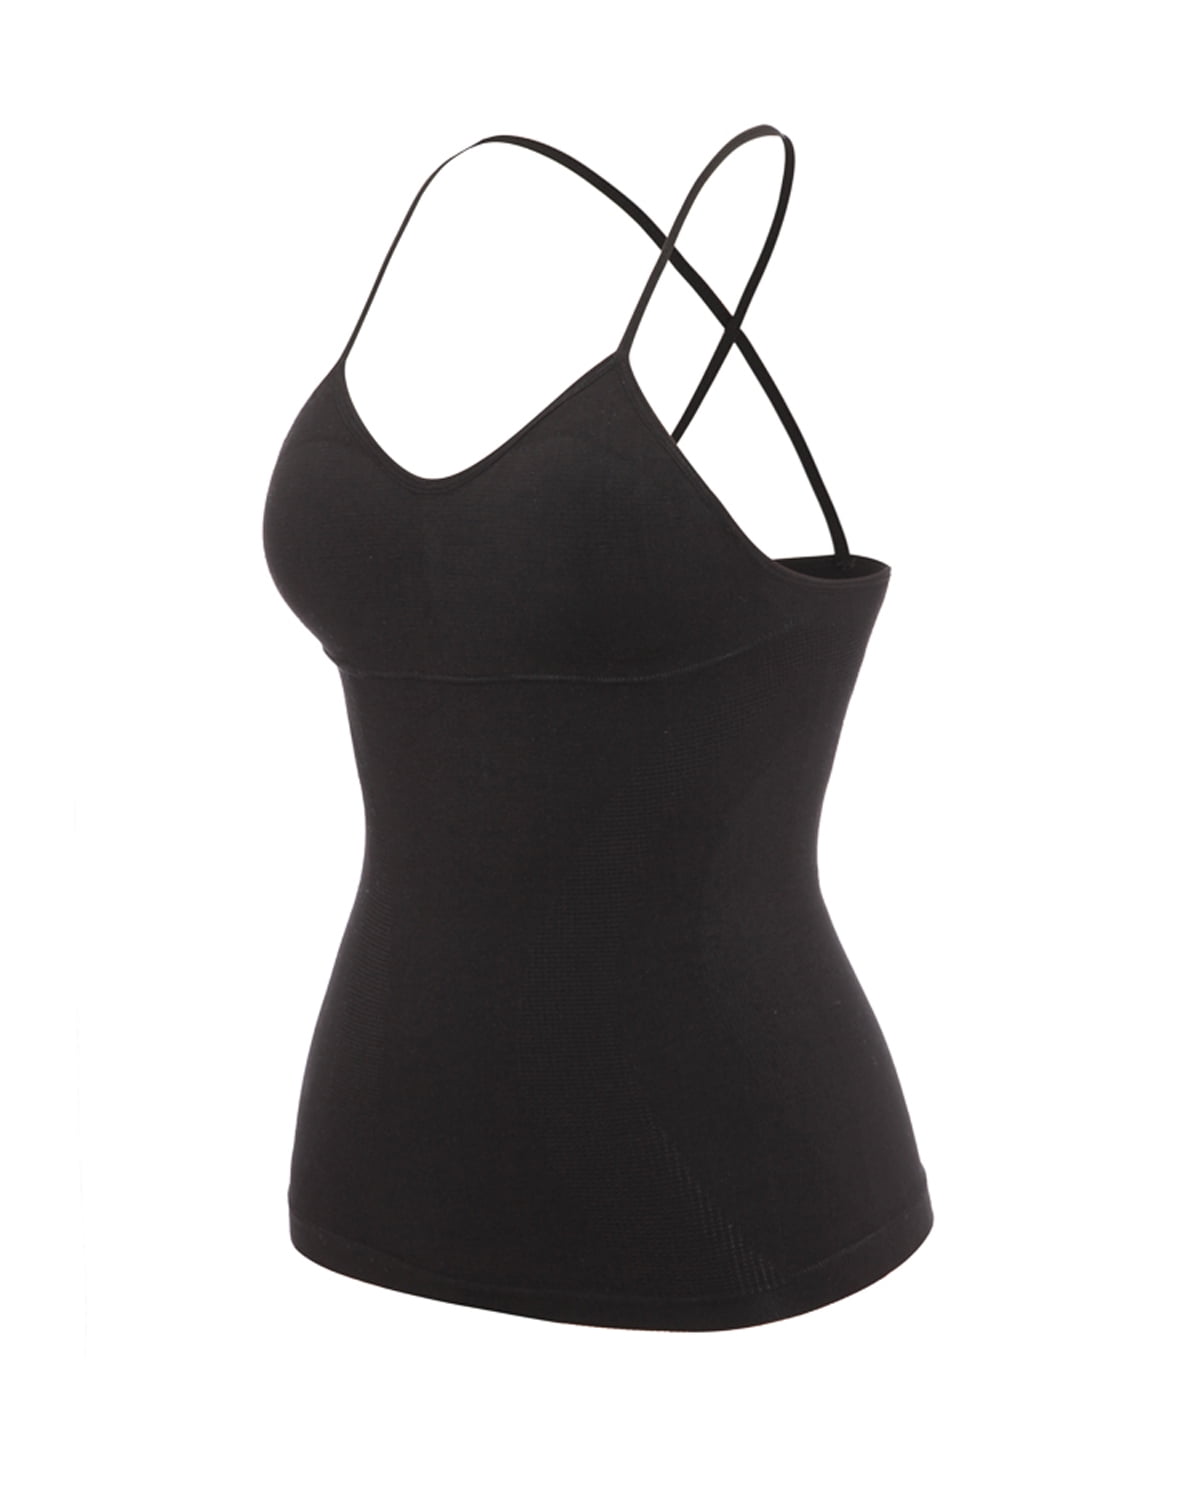 ROSYLINE Womens Camisole with Shelf Bra Cotton Undershirts Adjustable Strap Camis Spaghetti Strap Tank Top 3 Pack